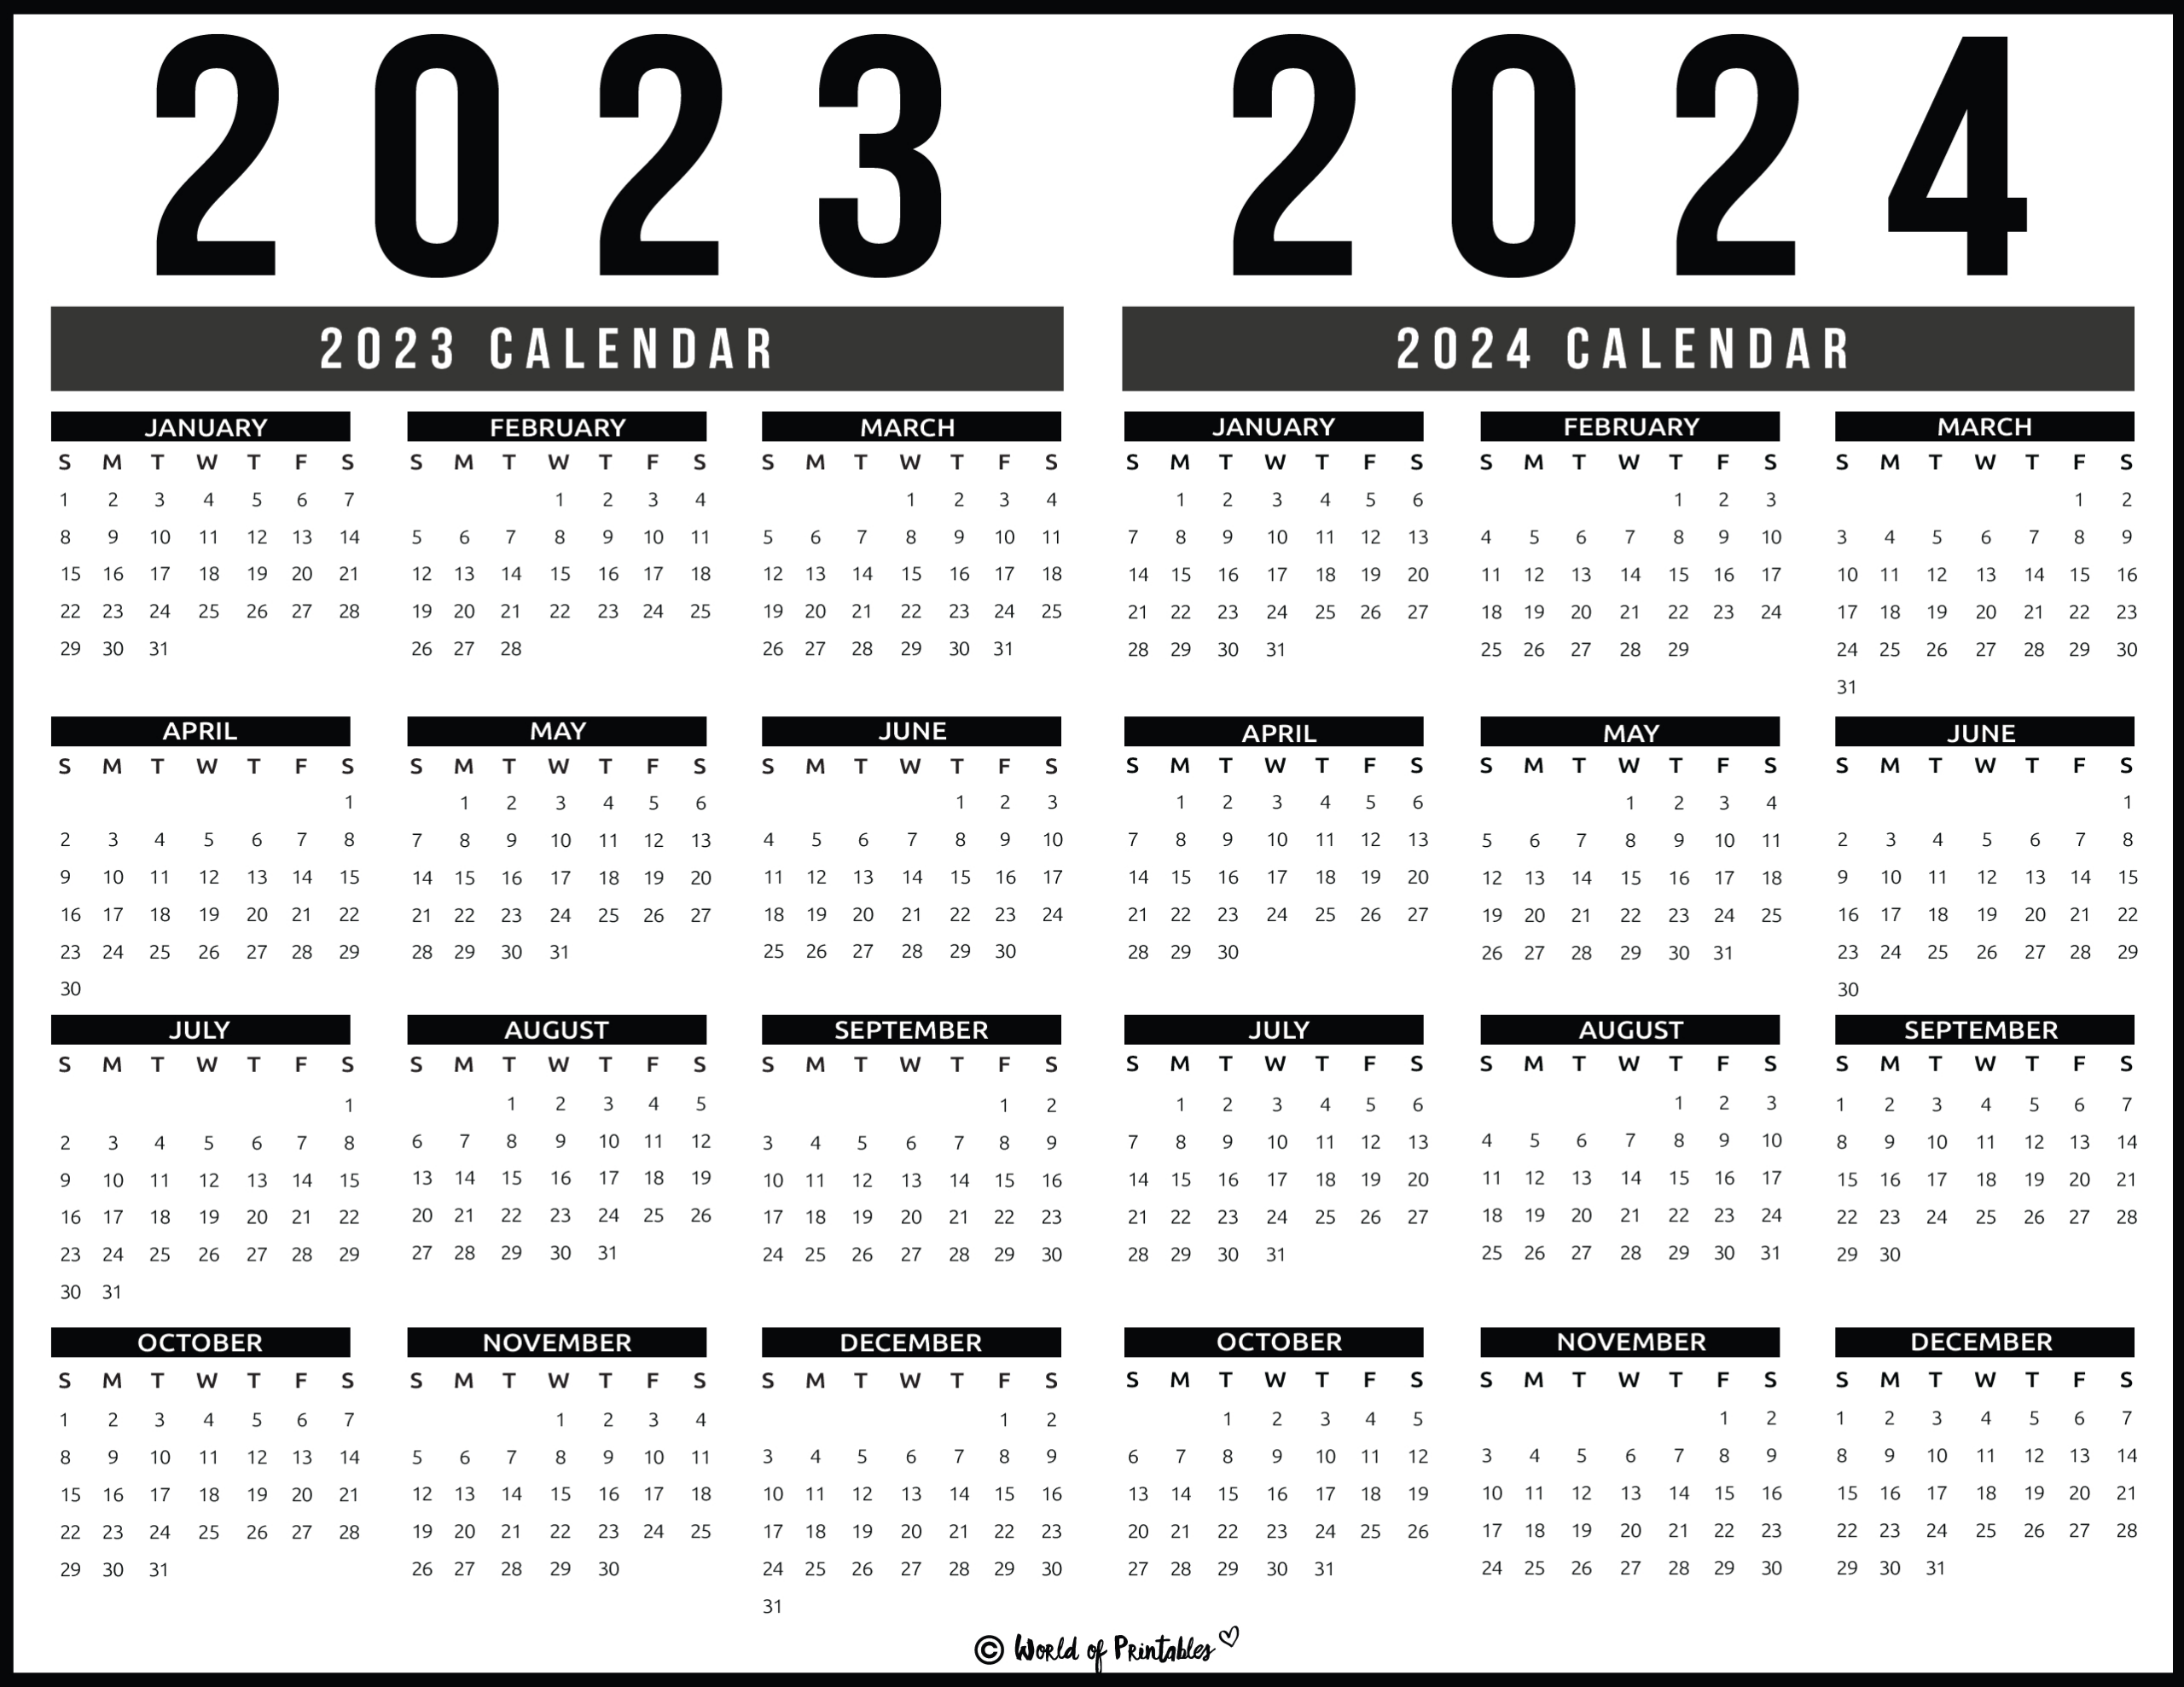 2023 2024 Calendar Free Printables - World Of Printables | 2023 2024 Monthly Calendar Printable